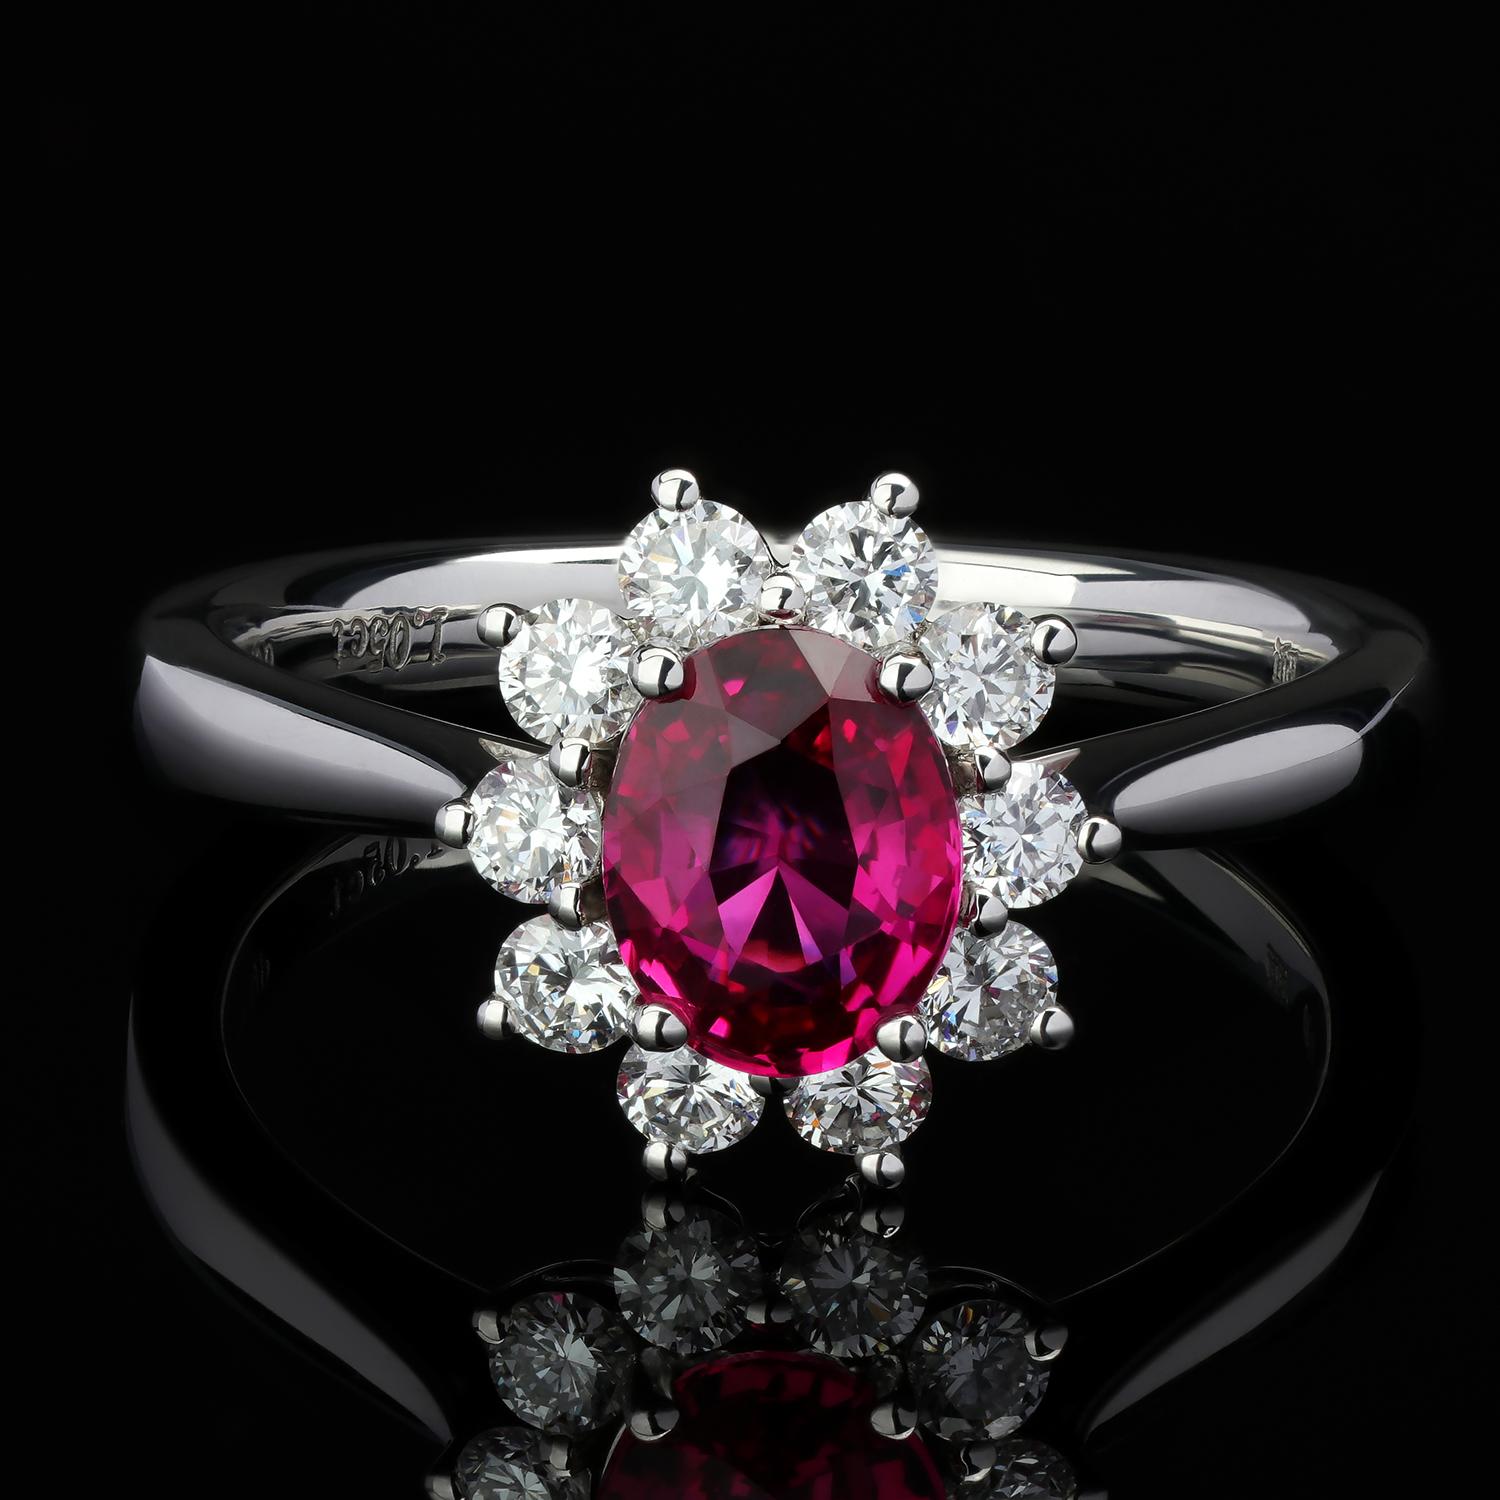 An engagement 18K white gold ring with natural Ruby and Diamonds with Jewelry 
ruby origin - Burma
ruby measurements - 0.12 х 0.2 х 0.28 in / 3 х 5 х 7 mm
ruby weight - 1.05 carats
10 diamonds - 0.44 carats
ring weight weight - 4.01 grams
ring size